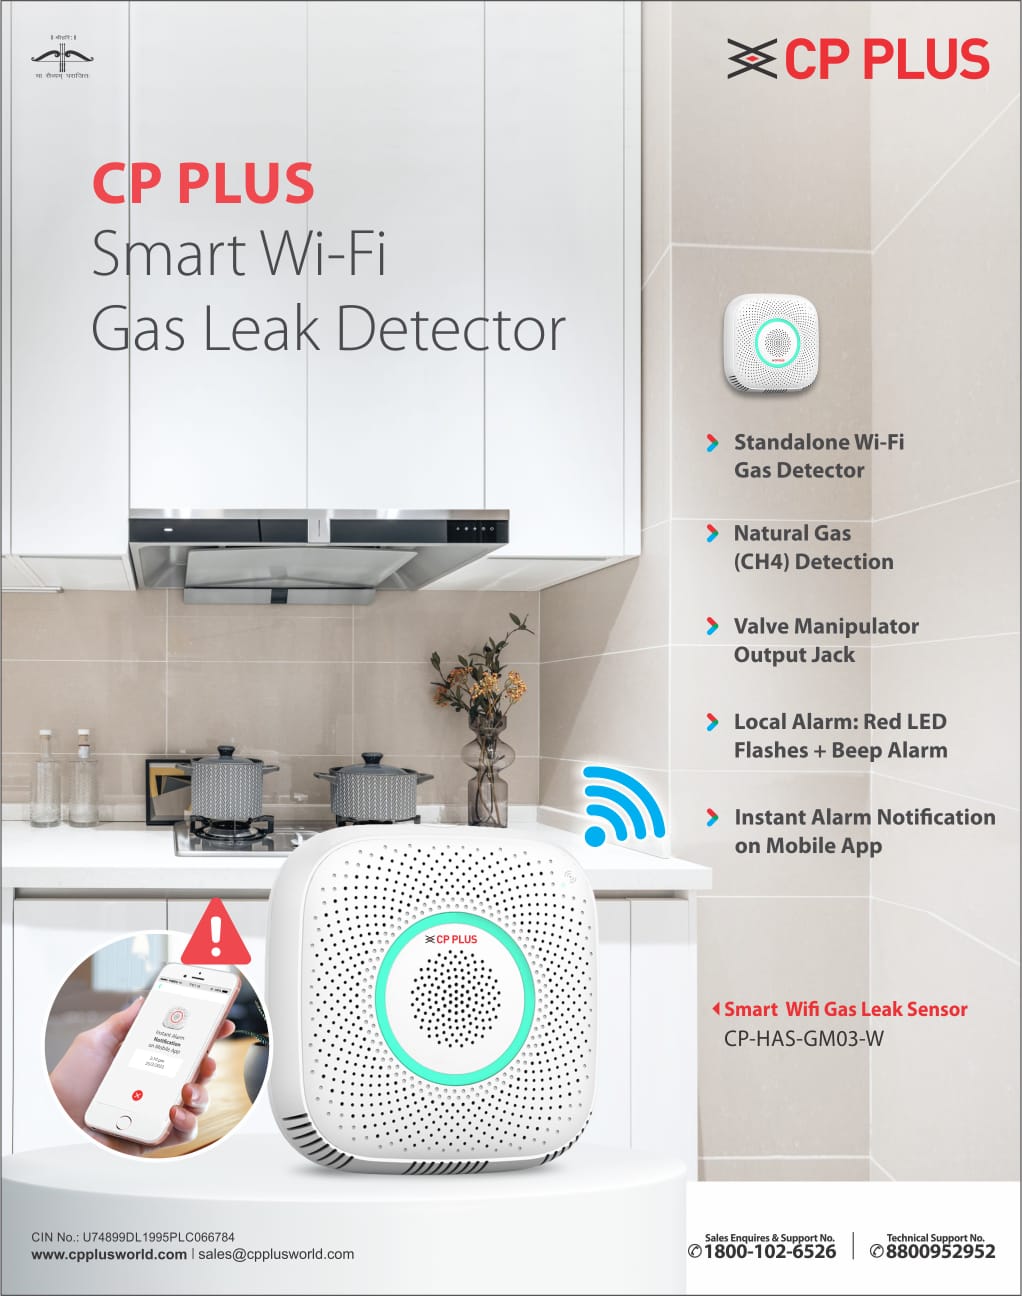 Smart Wi-Fi Gas Leak Detector